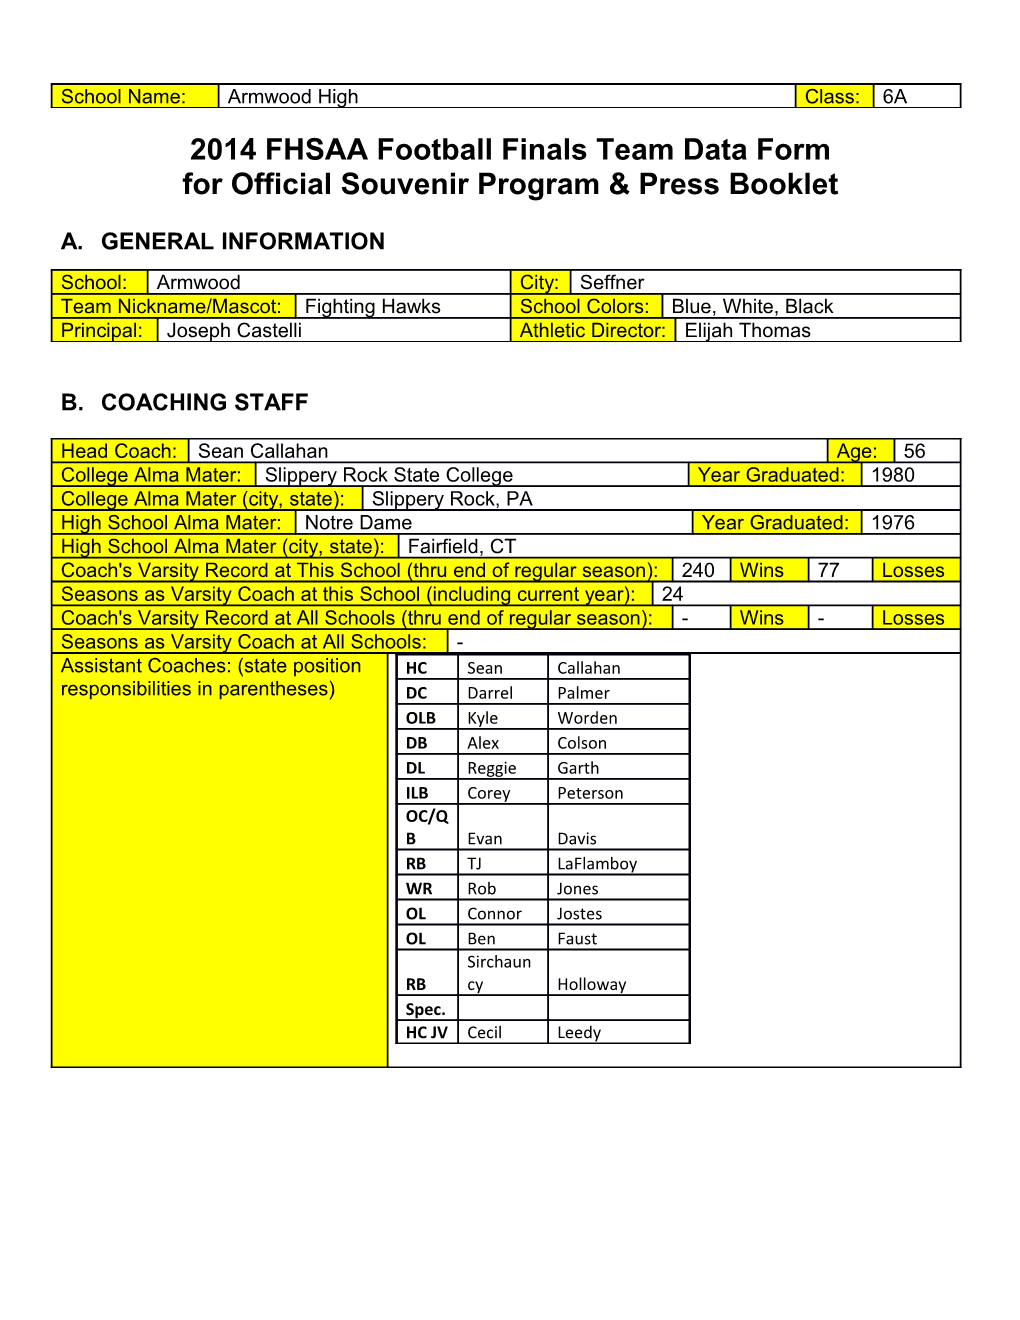 2014 FHSAA Football Finals Team Data Form